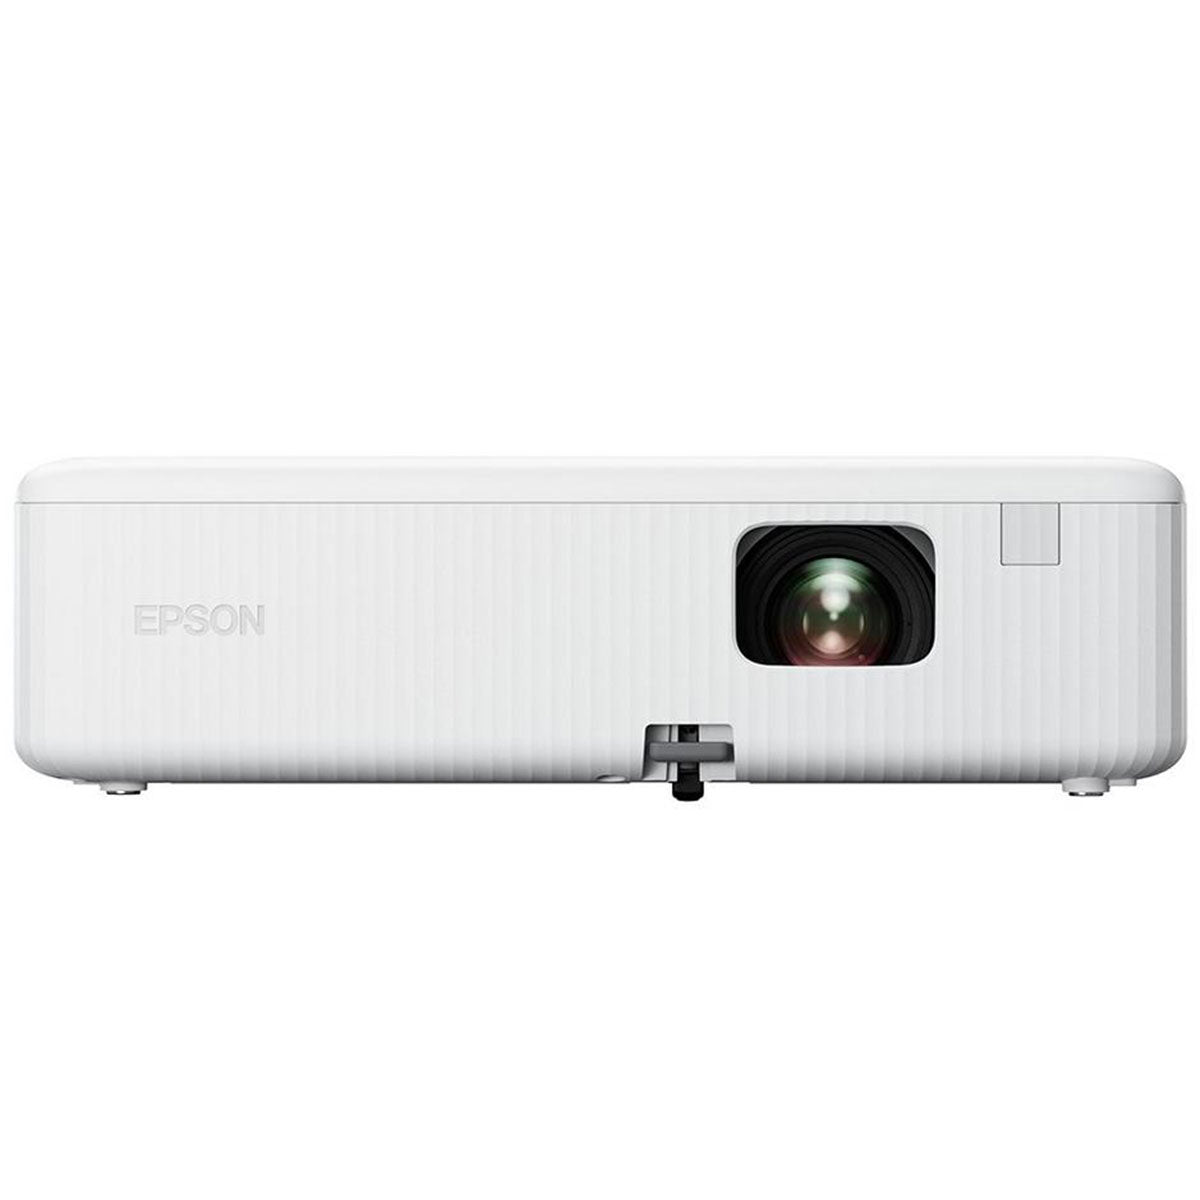 Epson CO-W01 Projector 3LCD Technology, WXGA, 1280 x 800, 16:10, 3000 Lumen - Vertexhub Shop